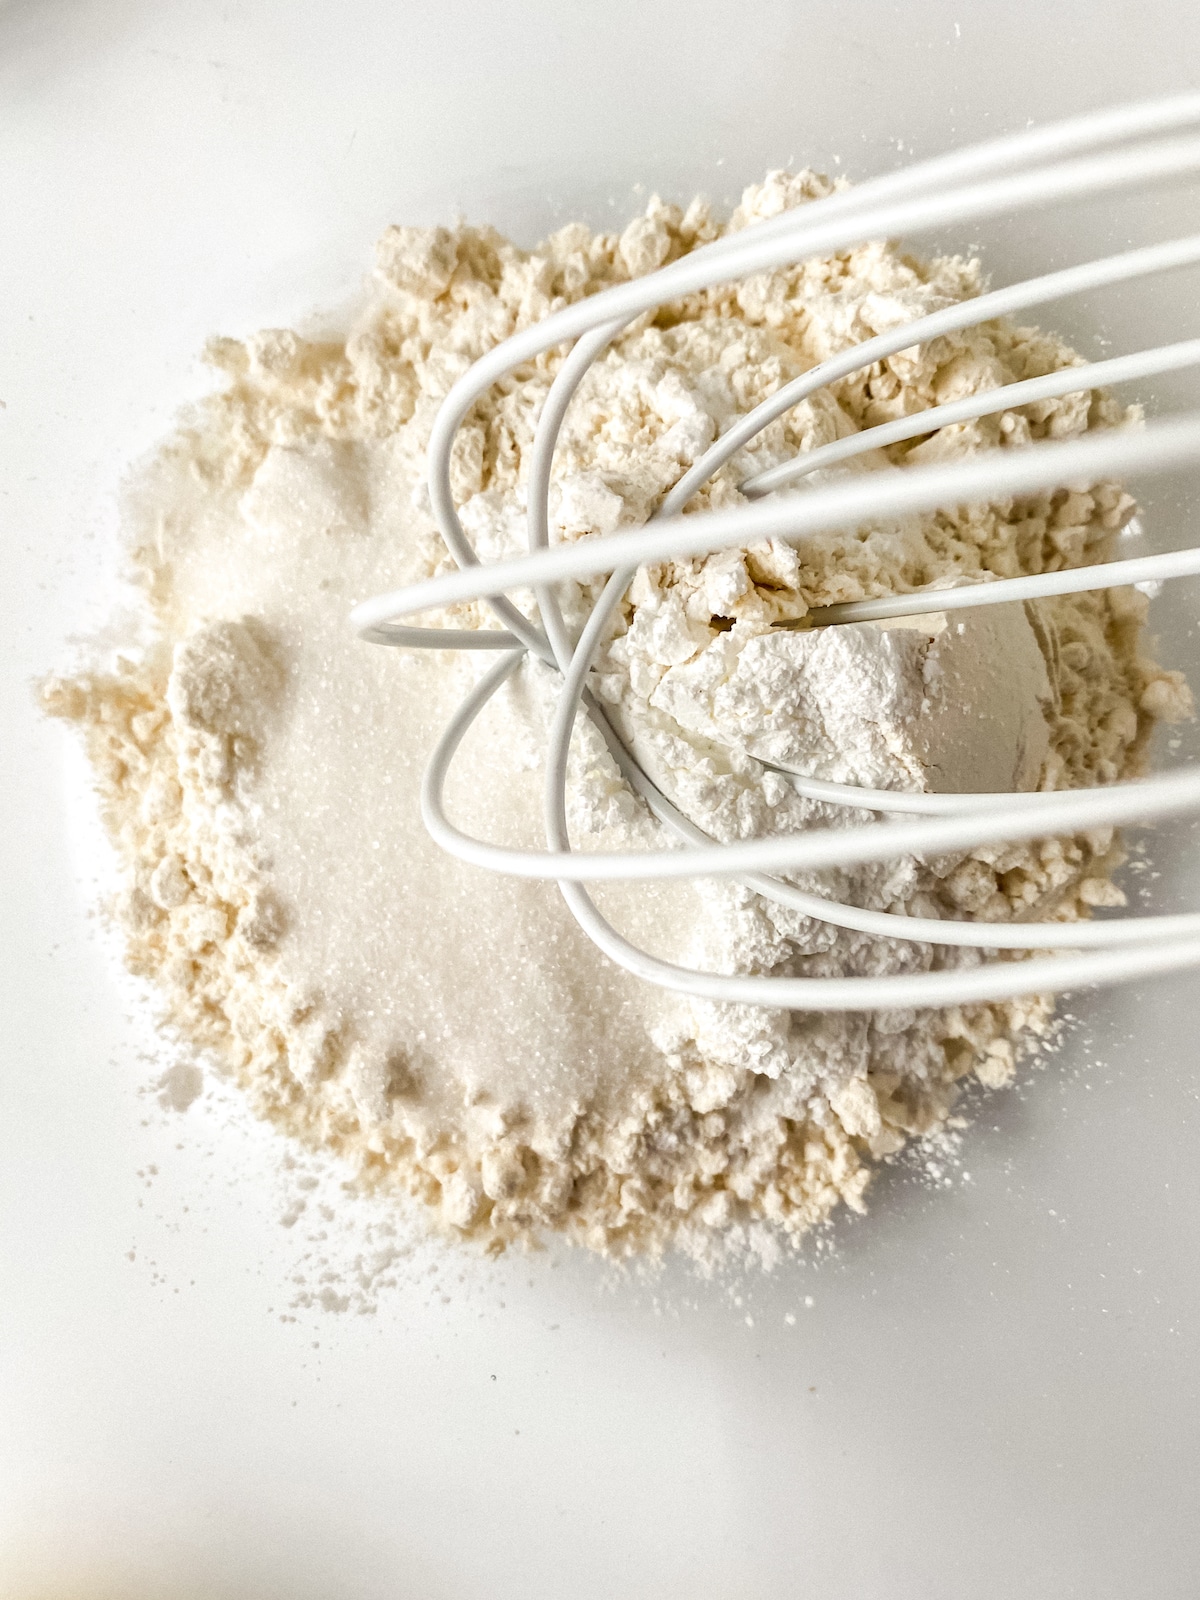 White whisk in bowl of flour and salt